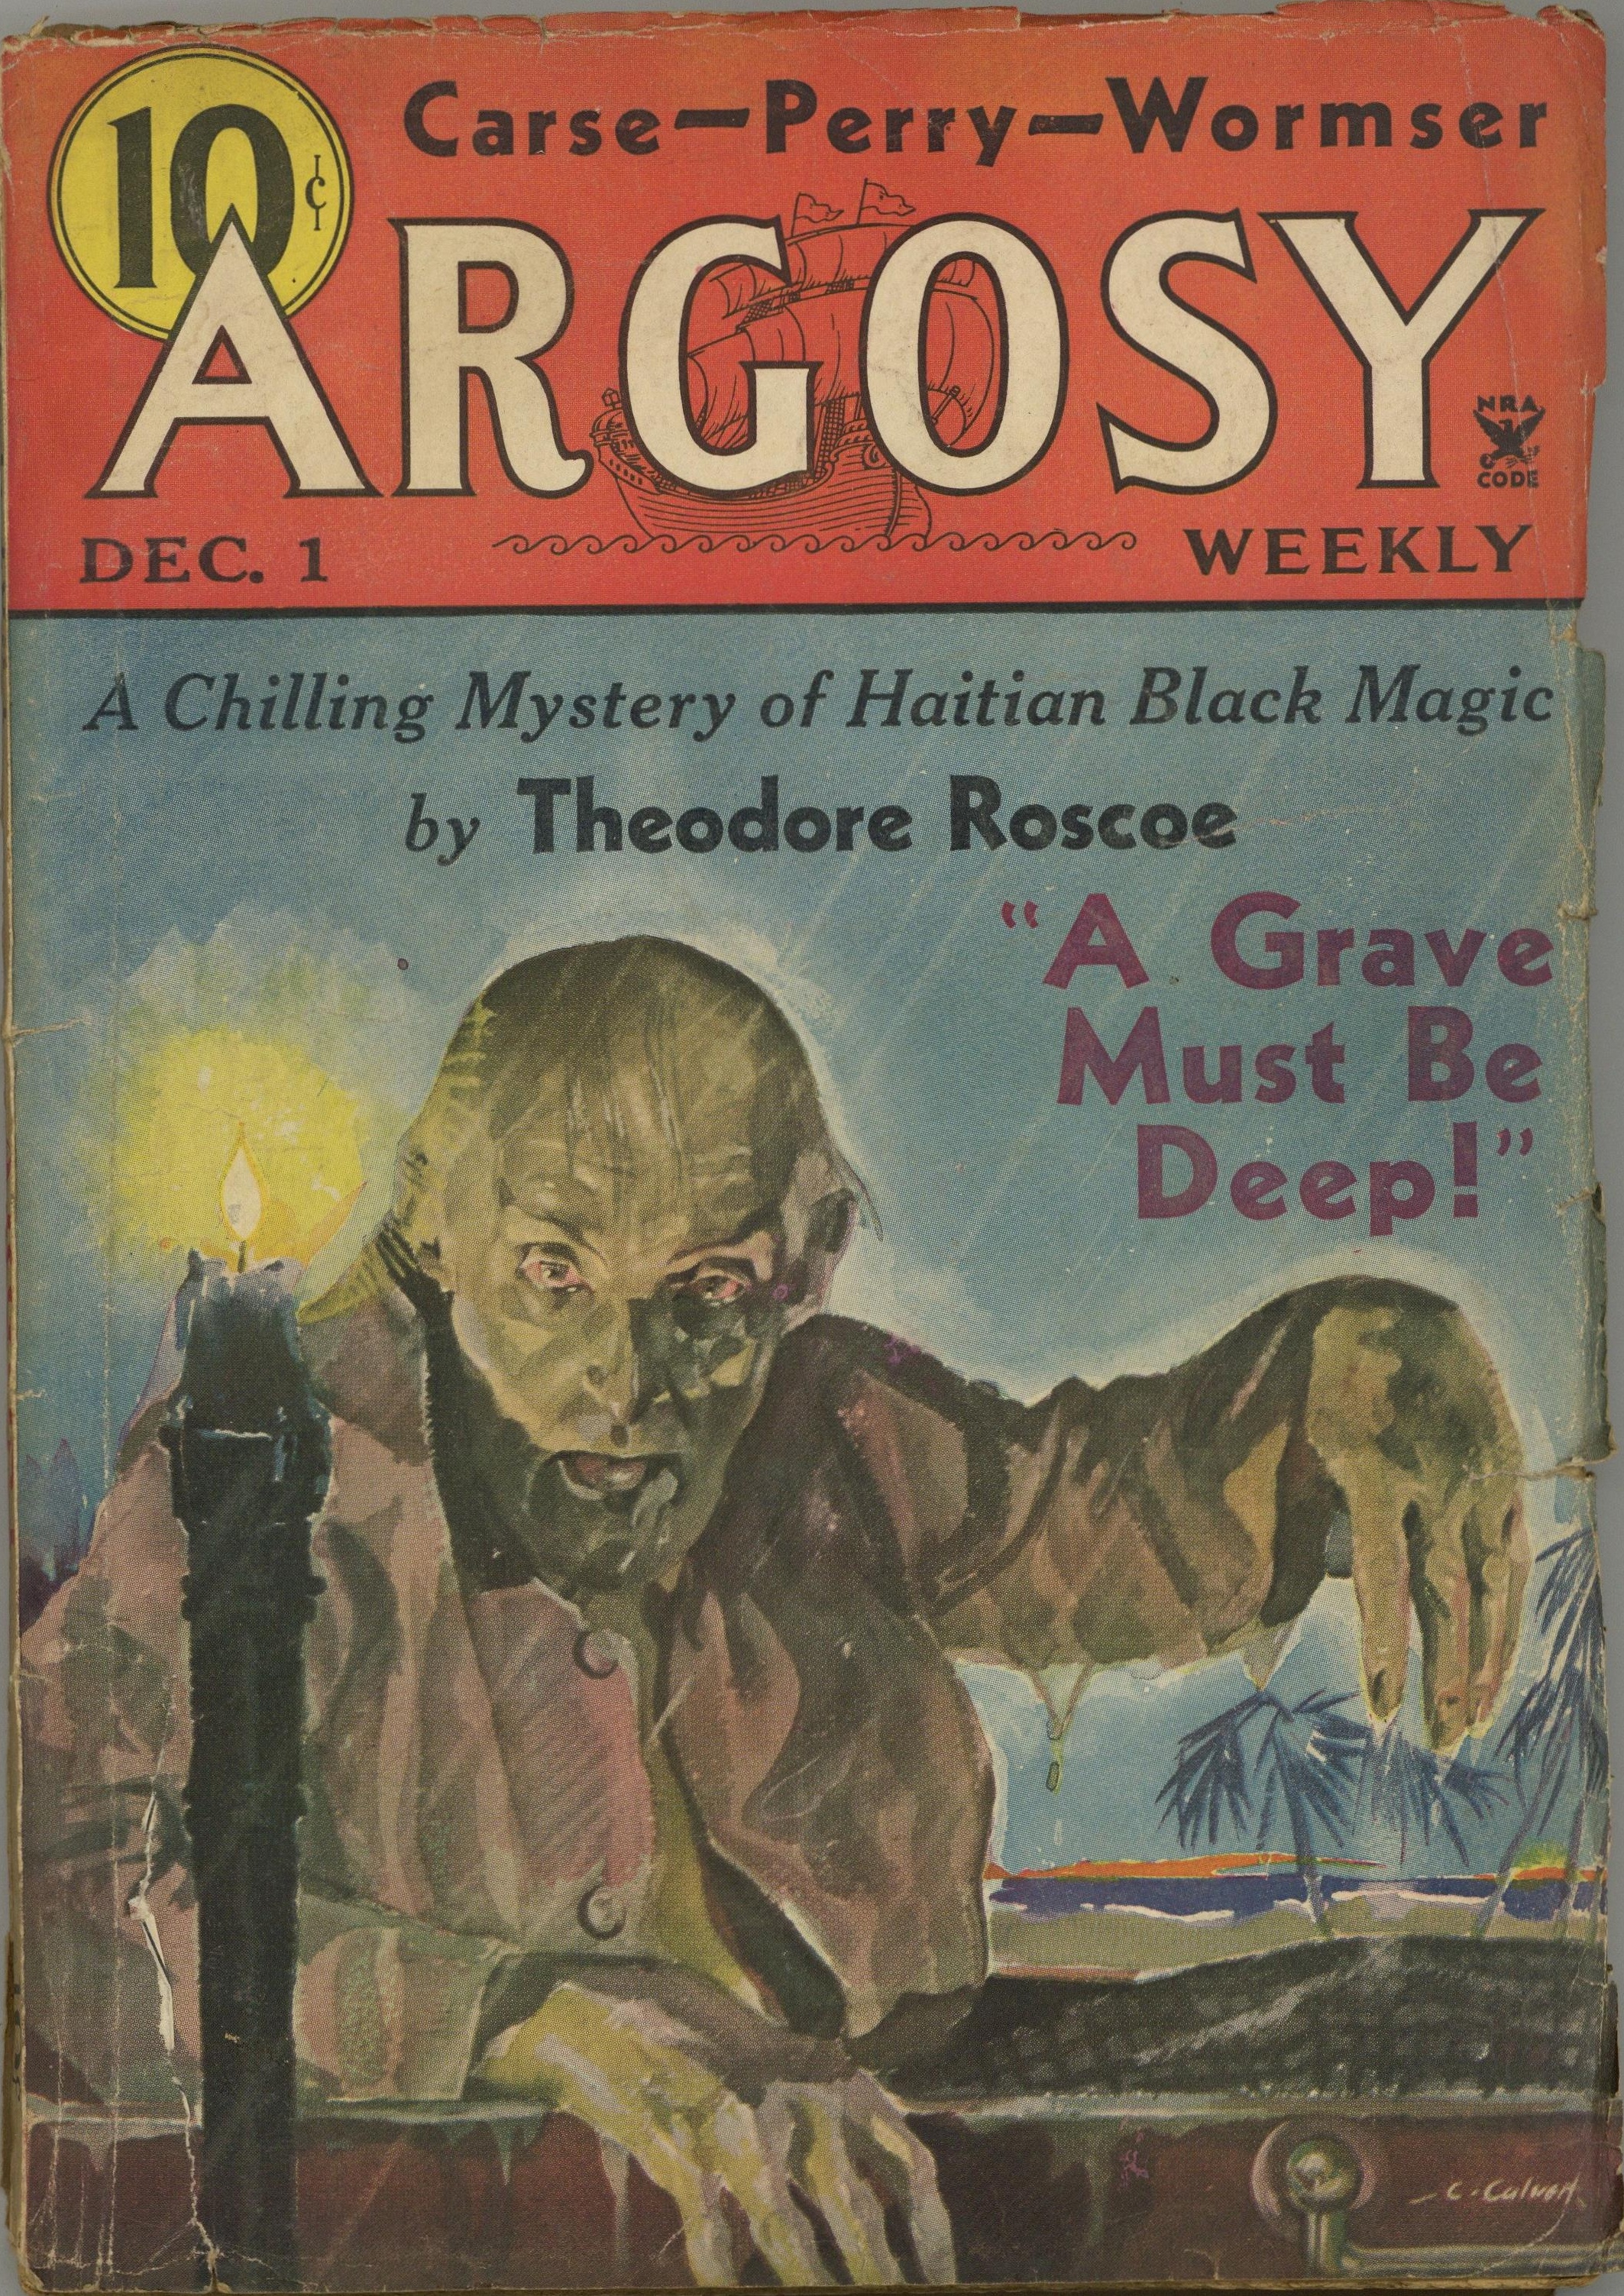 Argosy Weekly December 1 1934